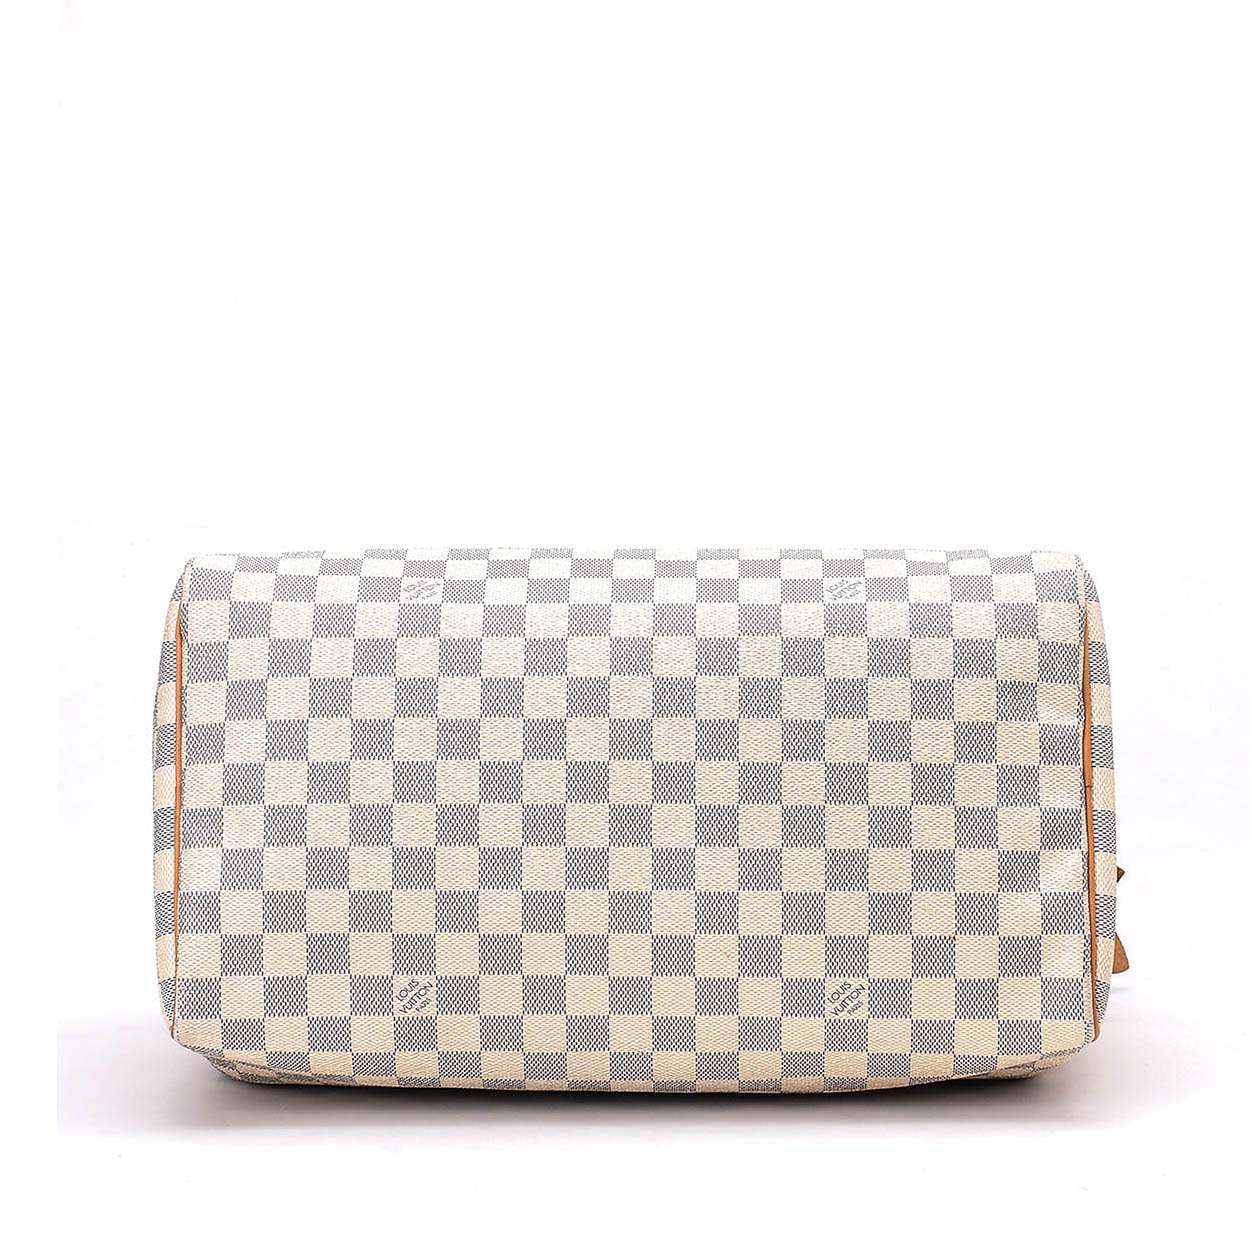 Louis Vuitton - Damier Azur Canvas Speedy 35 Bag